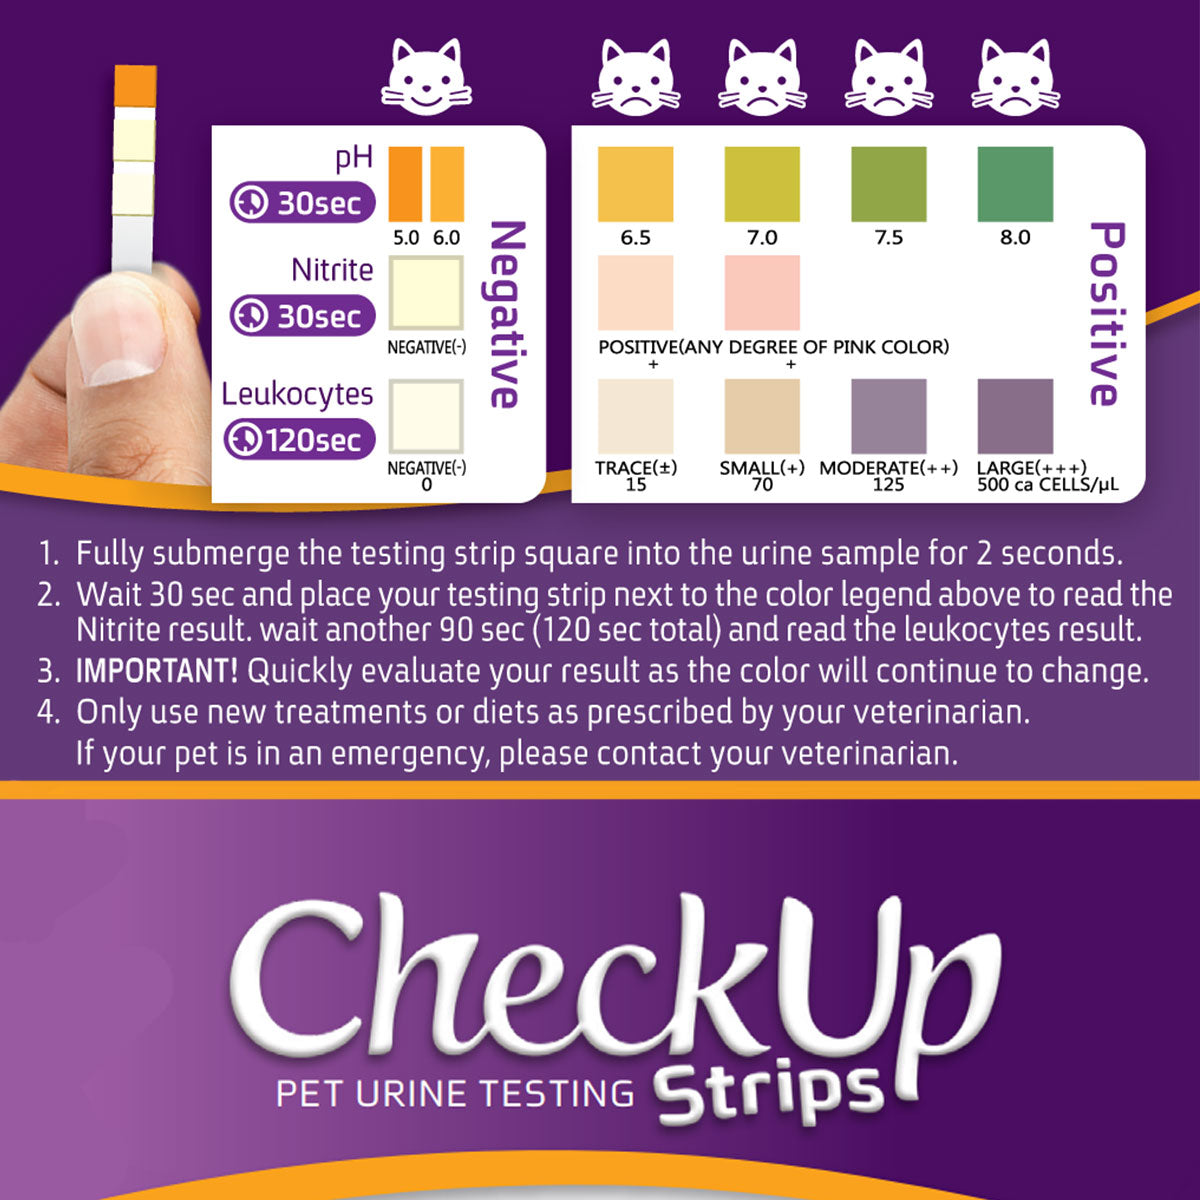 Coastline Global CheckUp Dog and Cat Urine Testing Strips for Detection of UTI